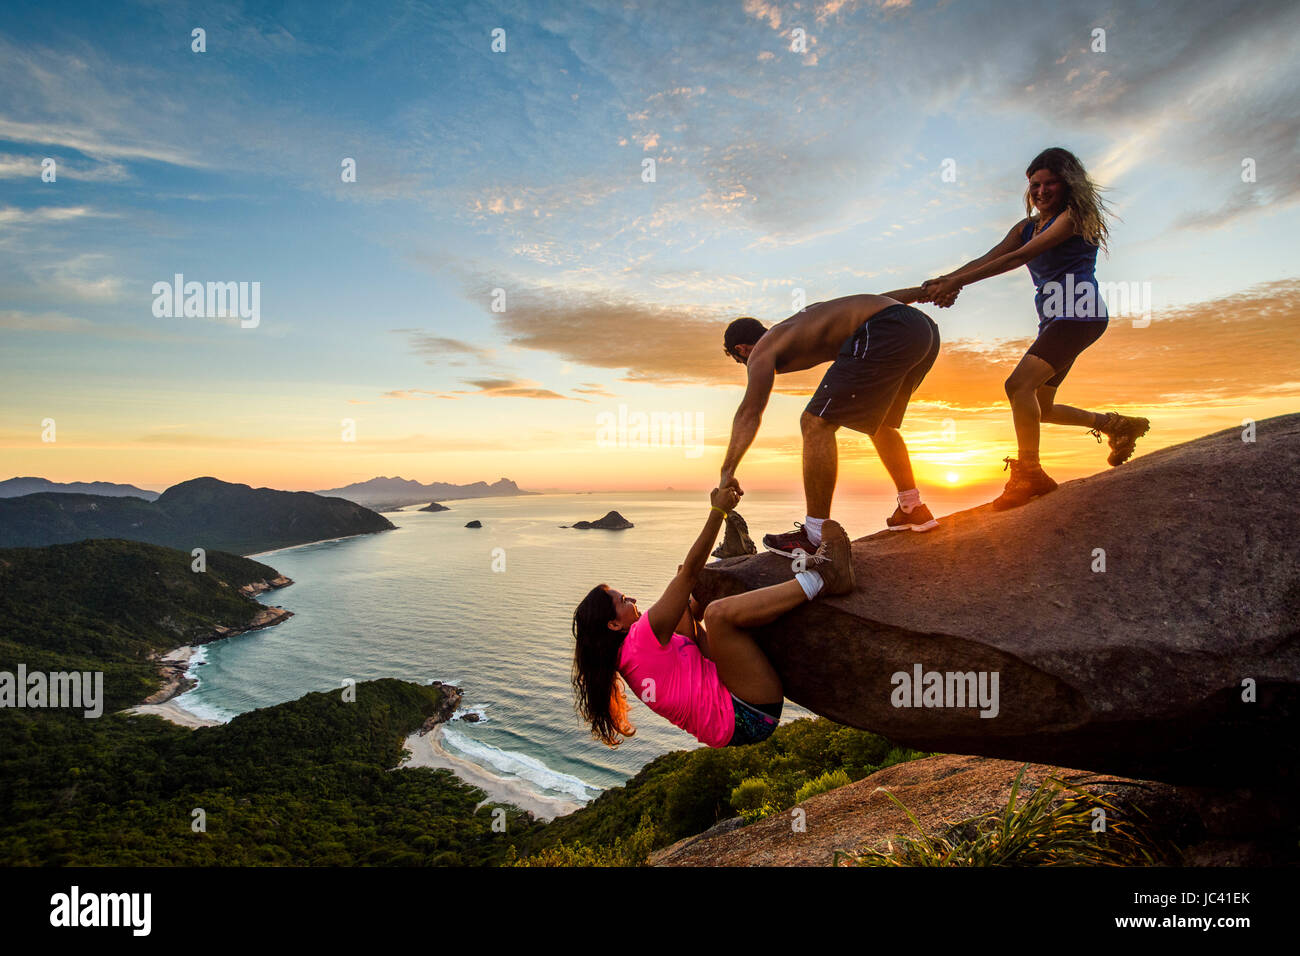 Two people helping woman climb up rock at sunset, Pedra do Telegrafo, Rio de Janeiro, Brazil Stock Photo